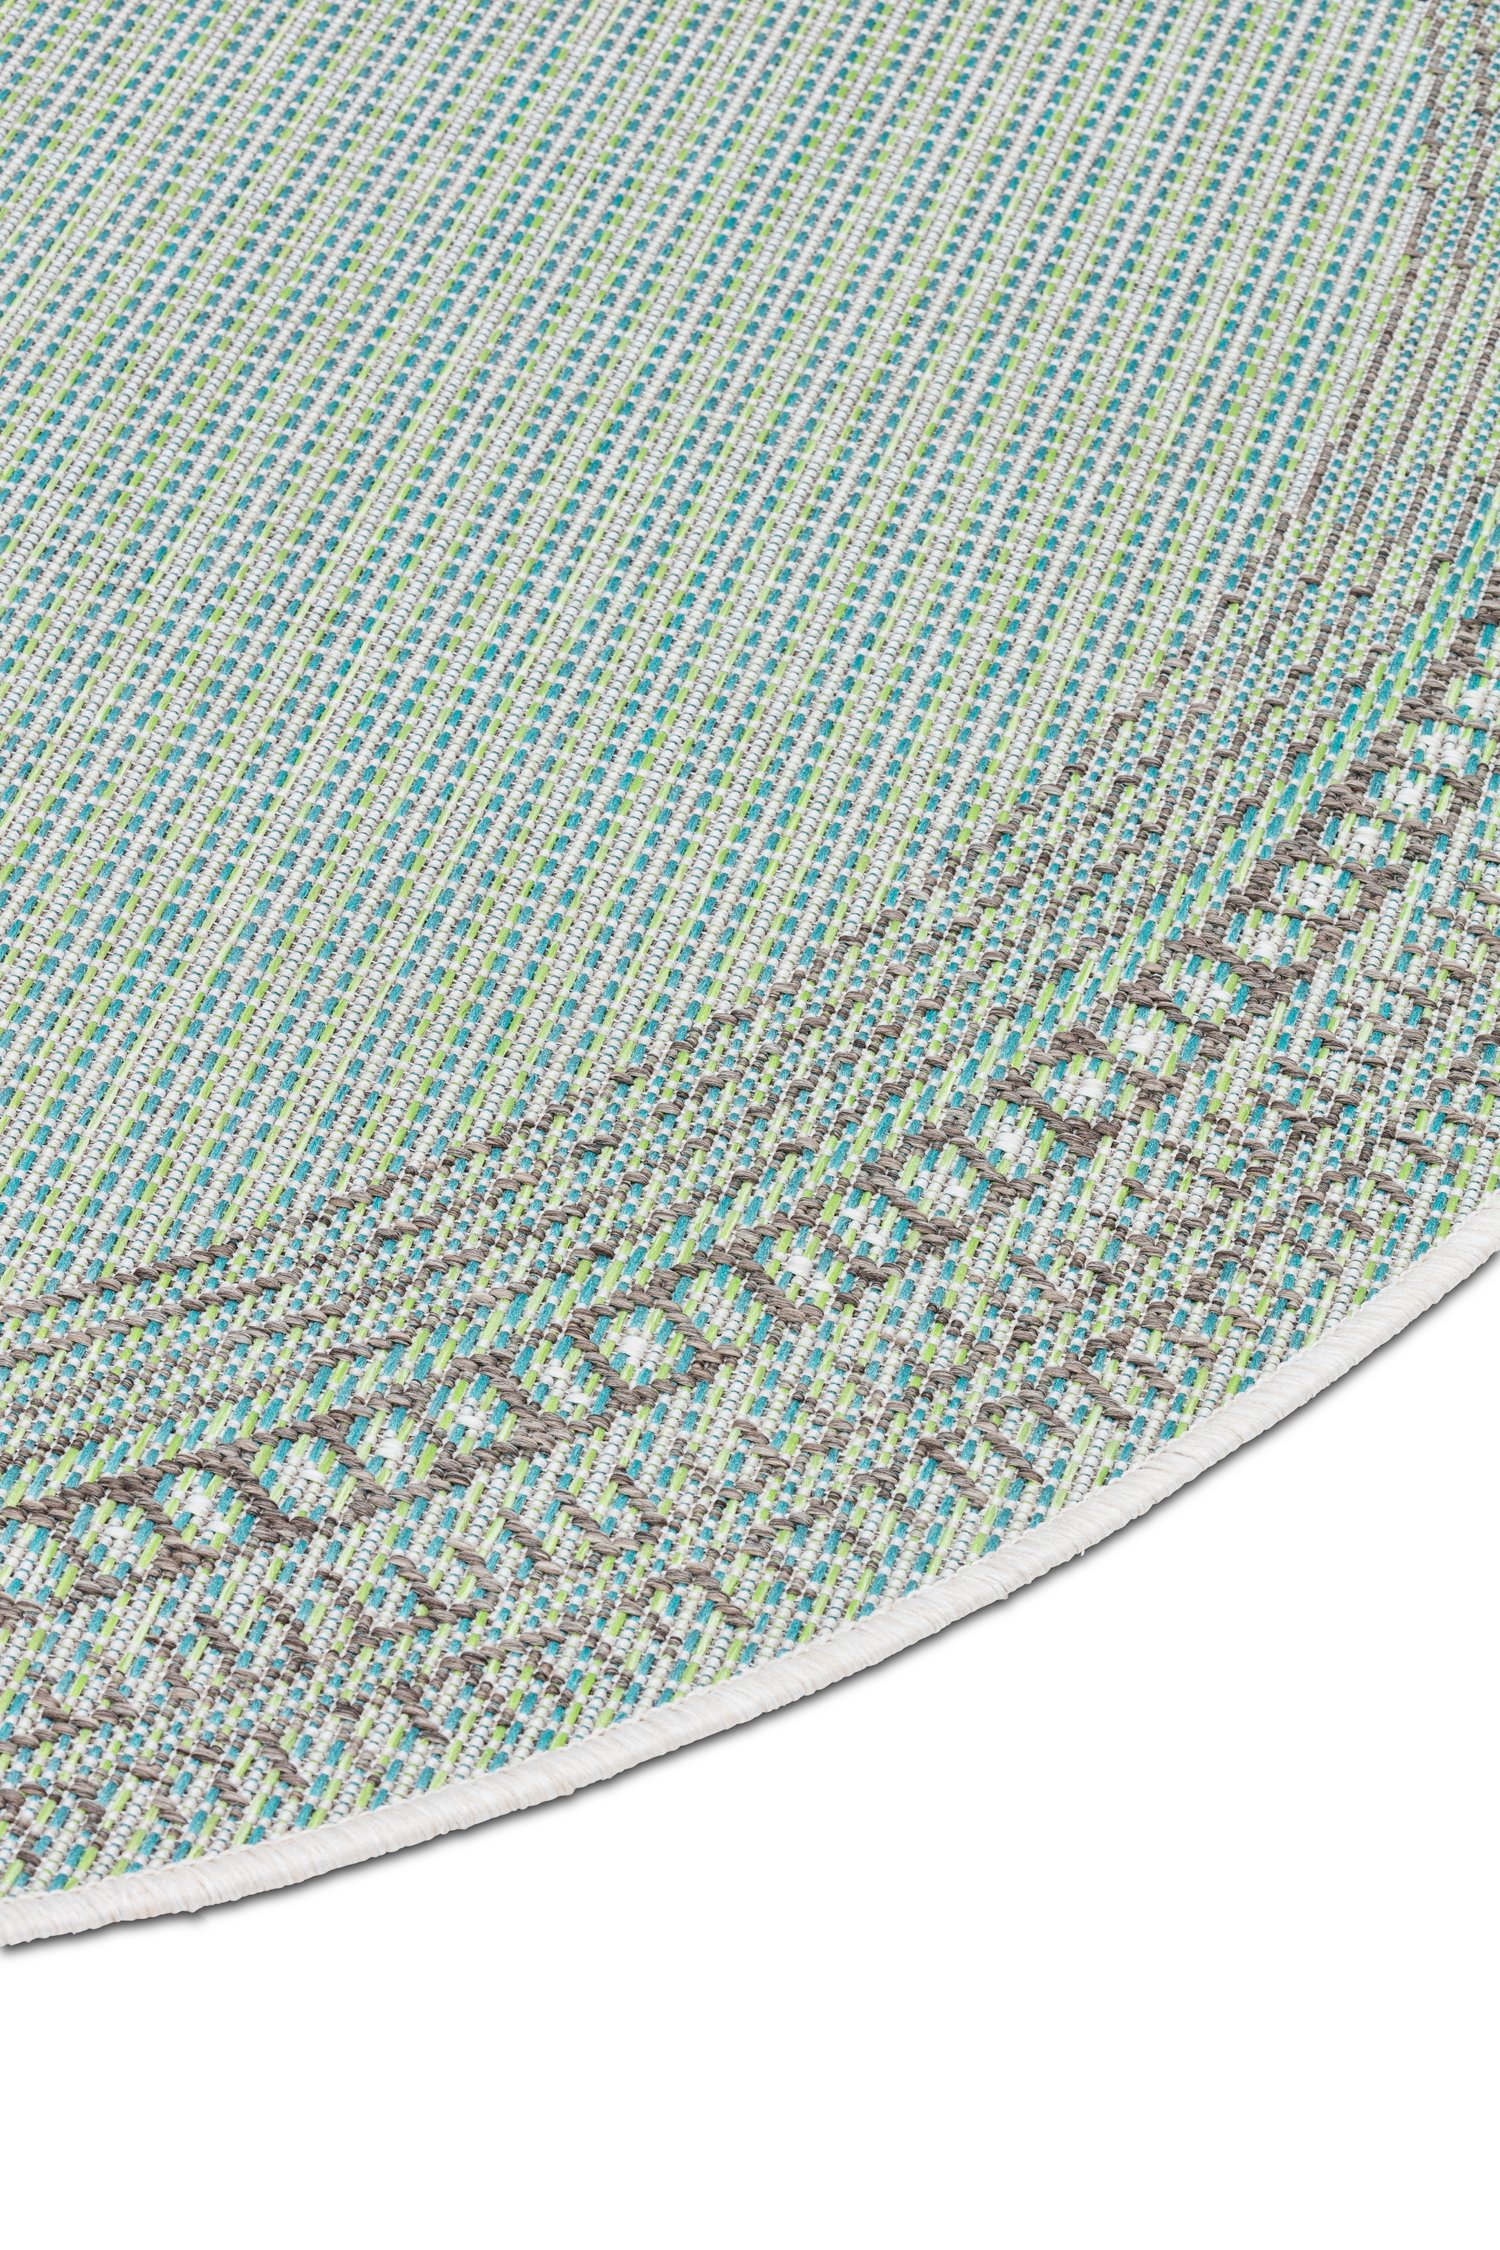 Okrągły dywan zewnętrzny - Harper Lime Roolf-Living